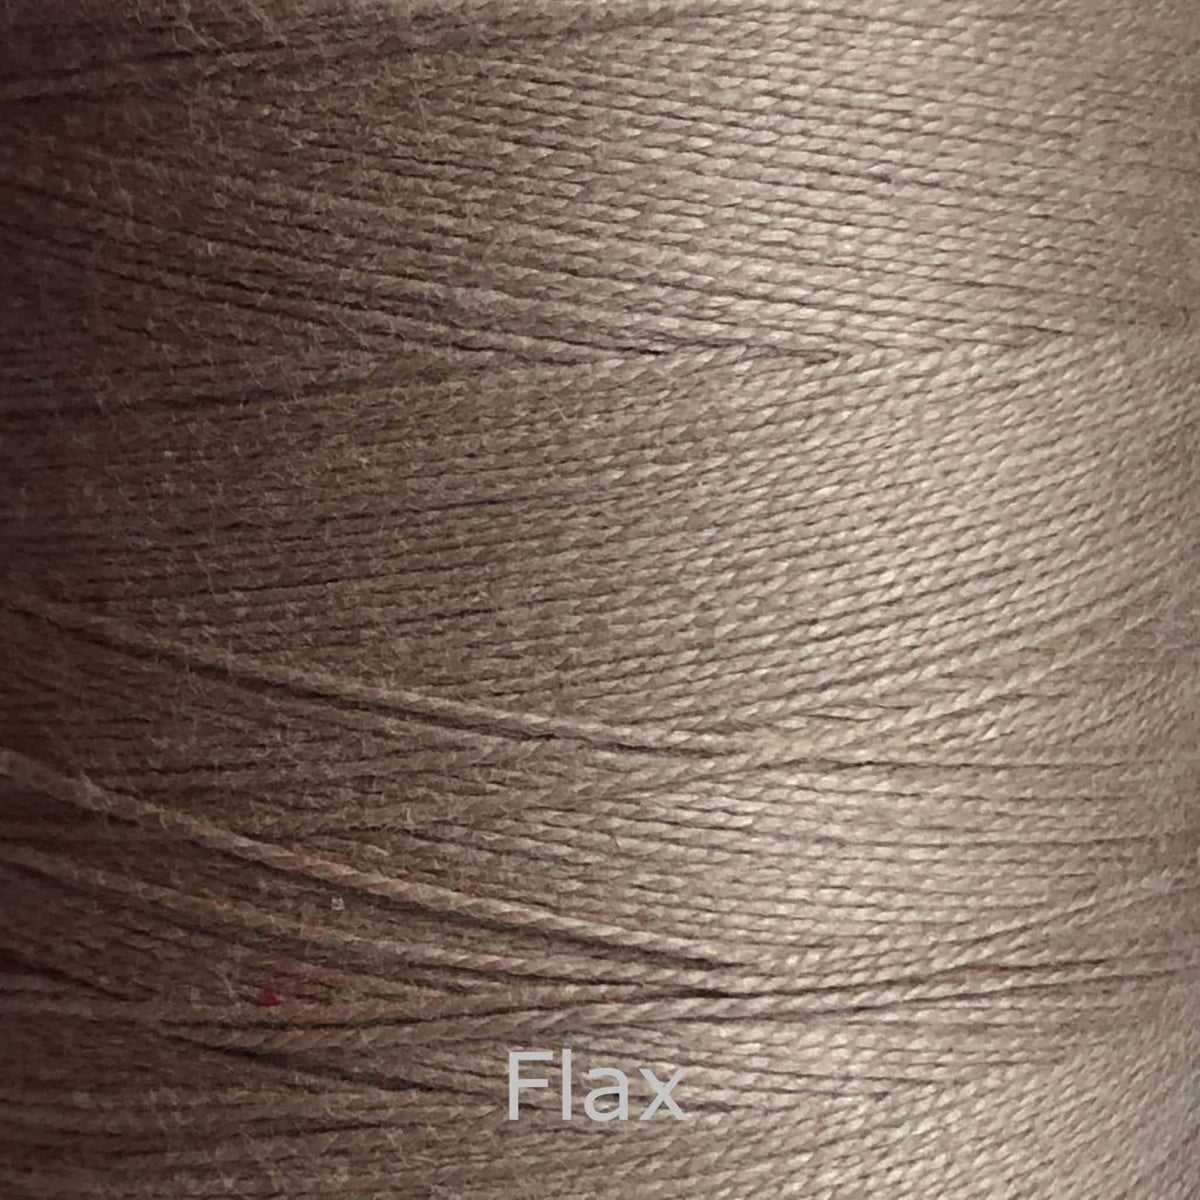 16/2 cotton weaving yarn flax